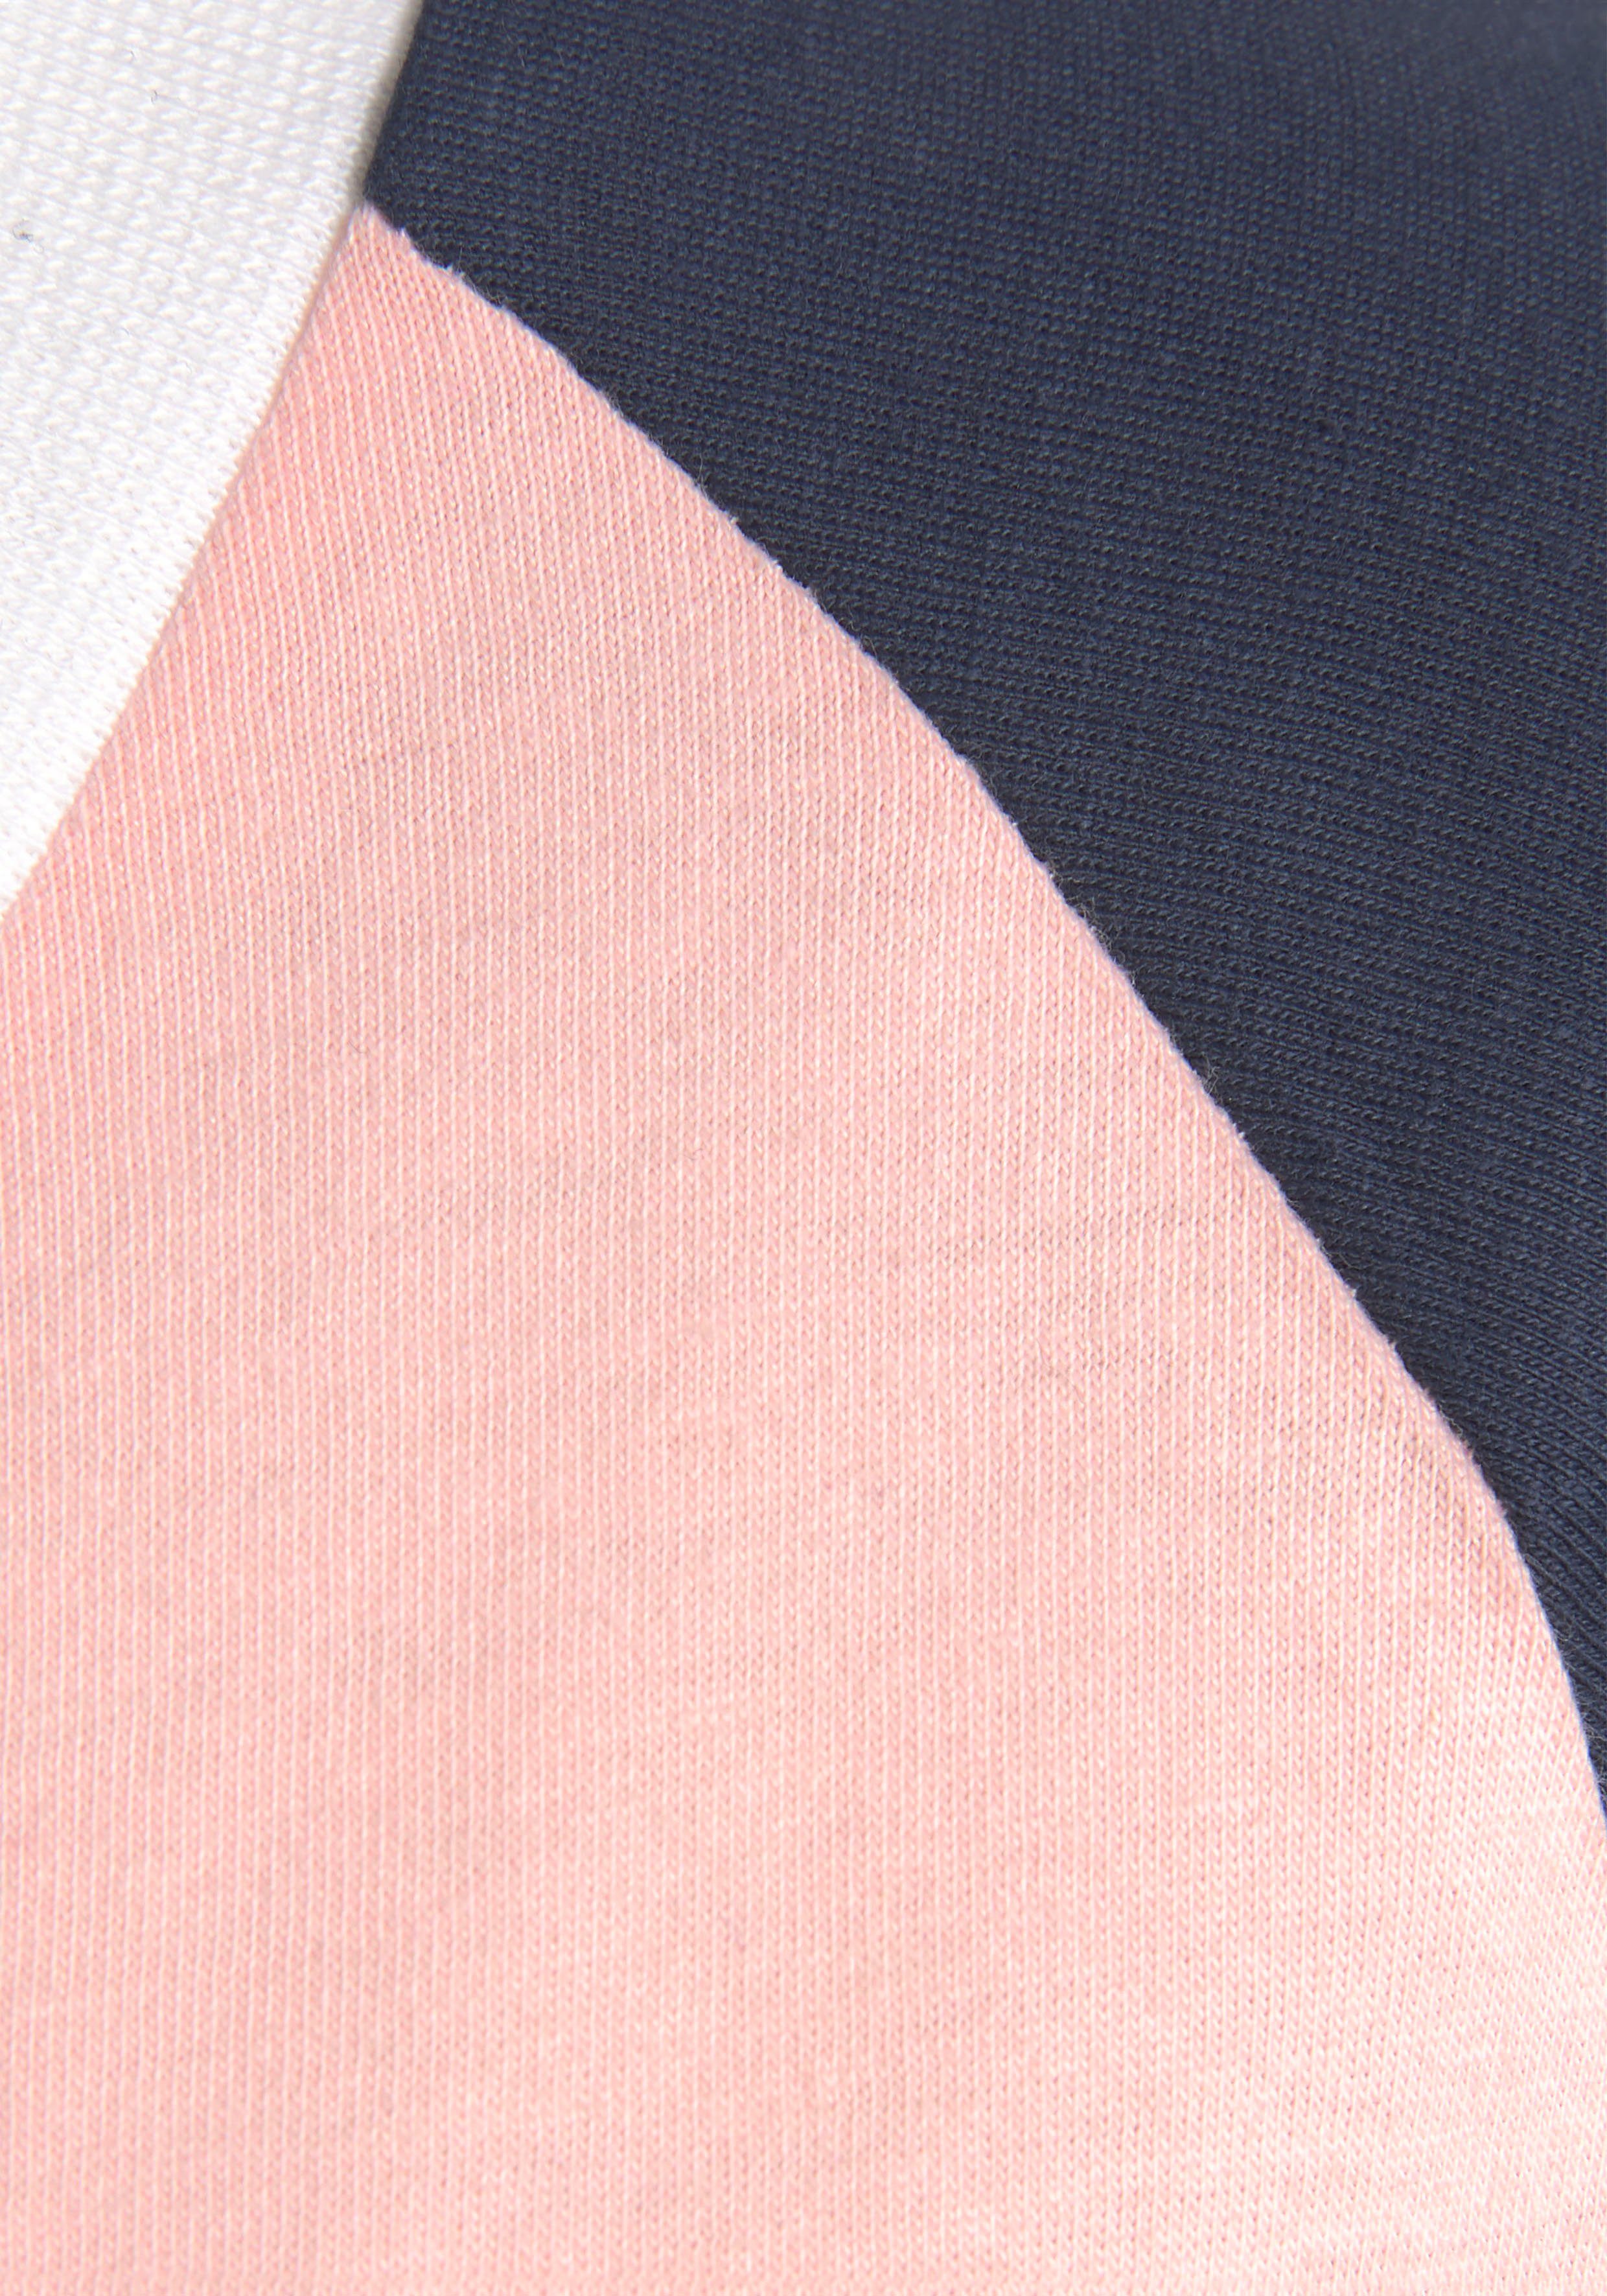 mit (2 kontrastfarbenen 1 tlg., KangaROOS Raglanärmeln Stück) rosa-dunkelblau Pyjama